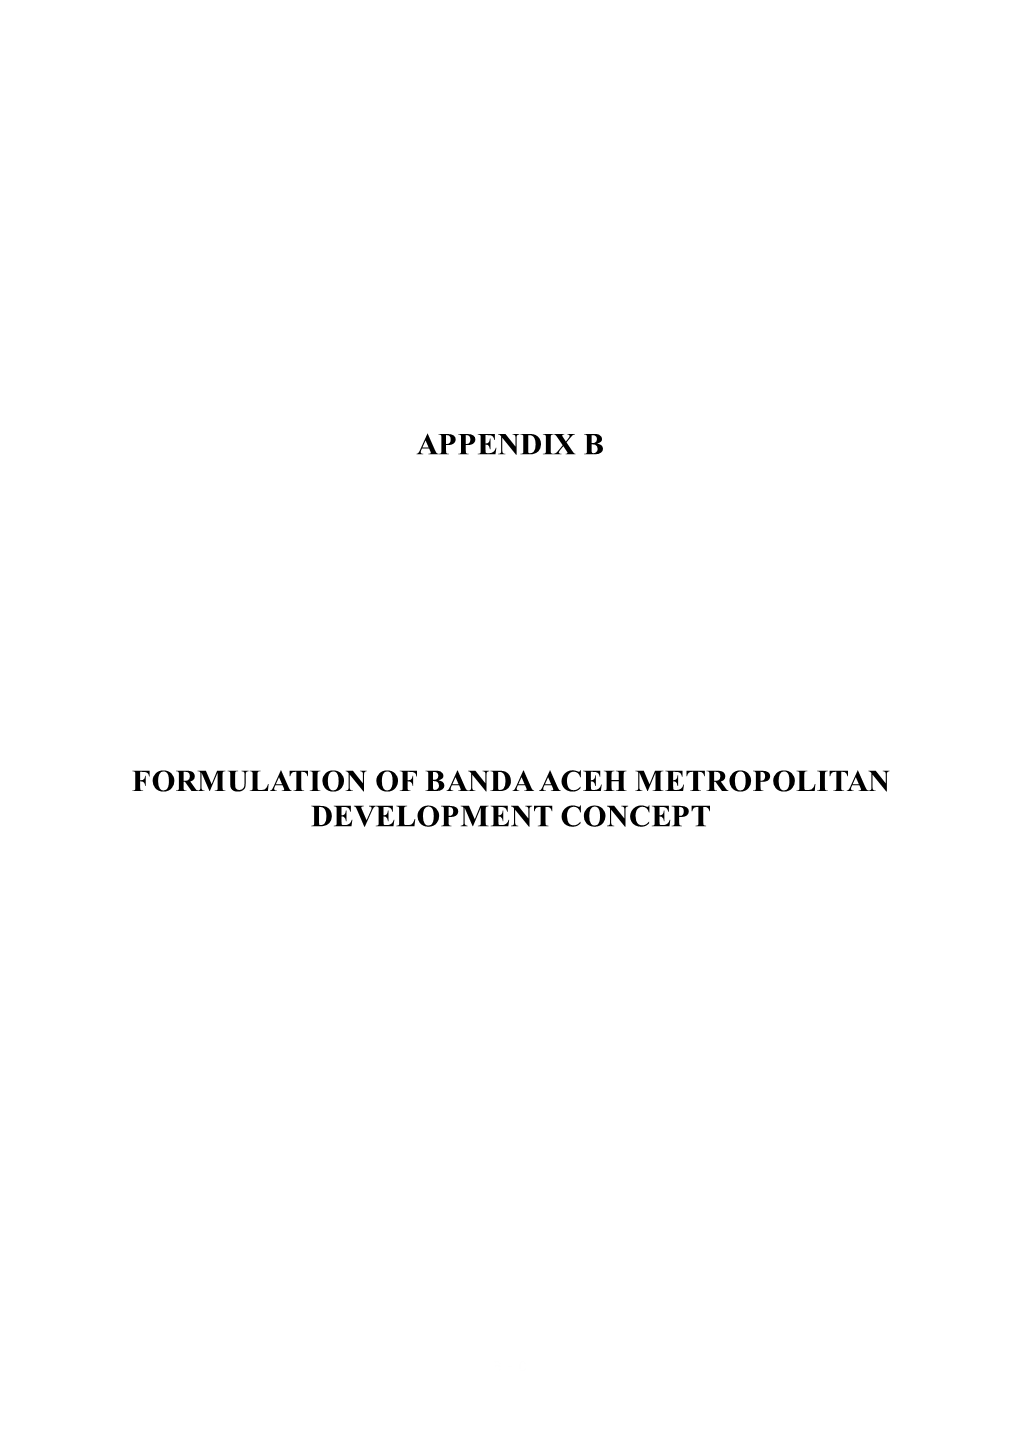 Appendix B Formulation of Banda Aceh Metropolitan